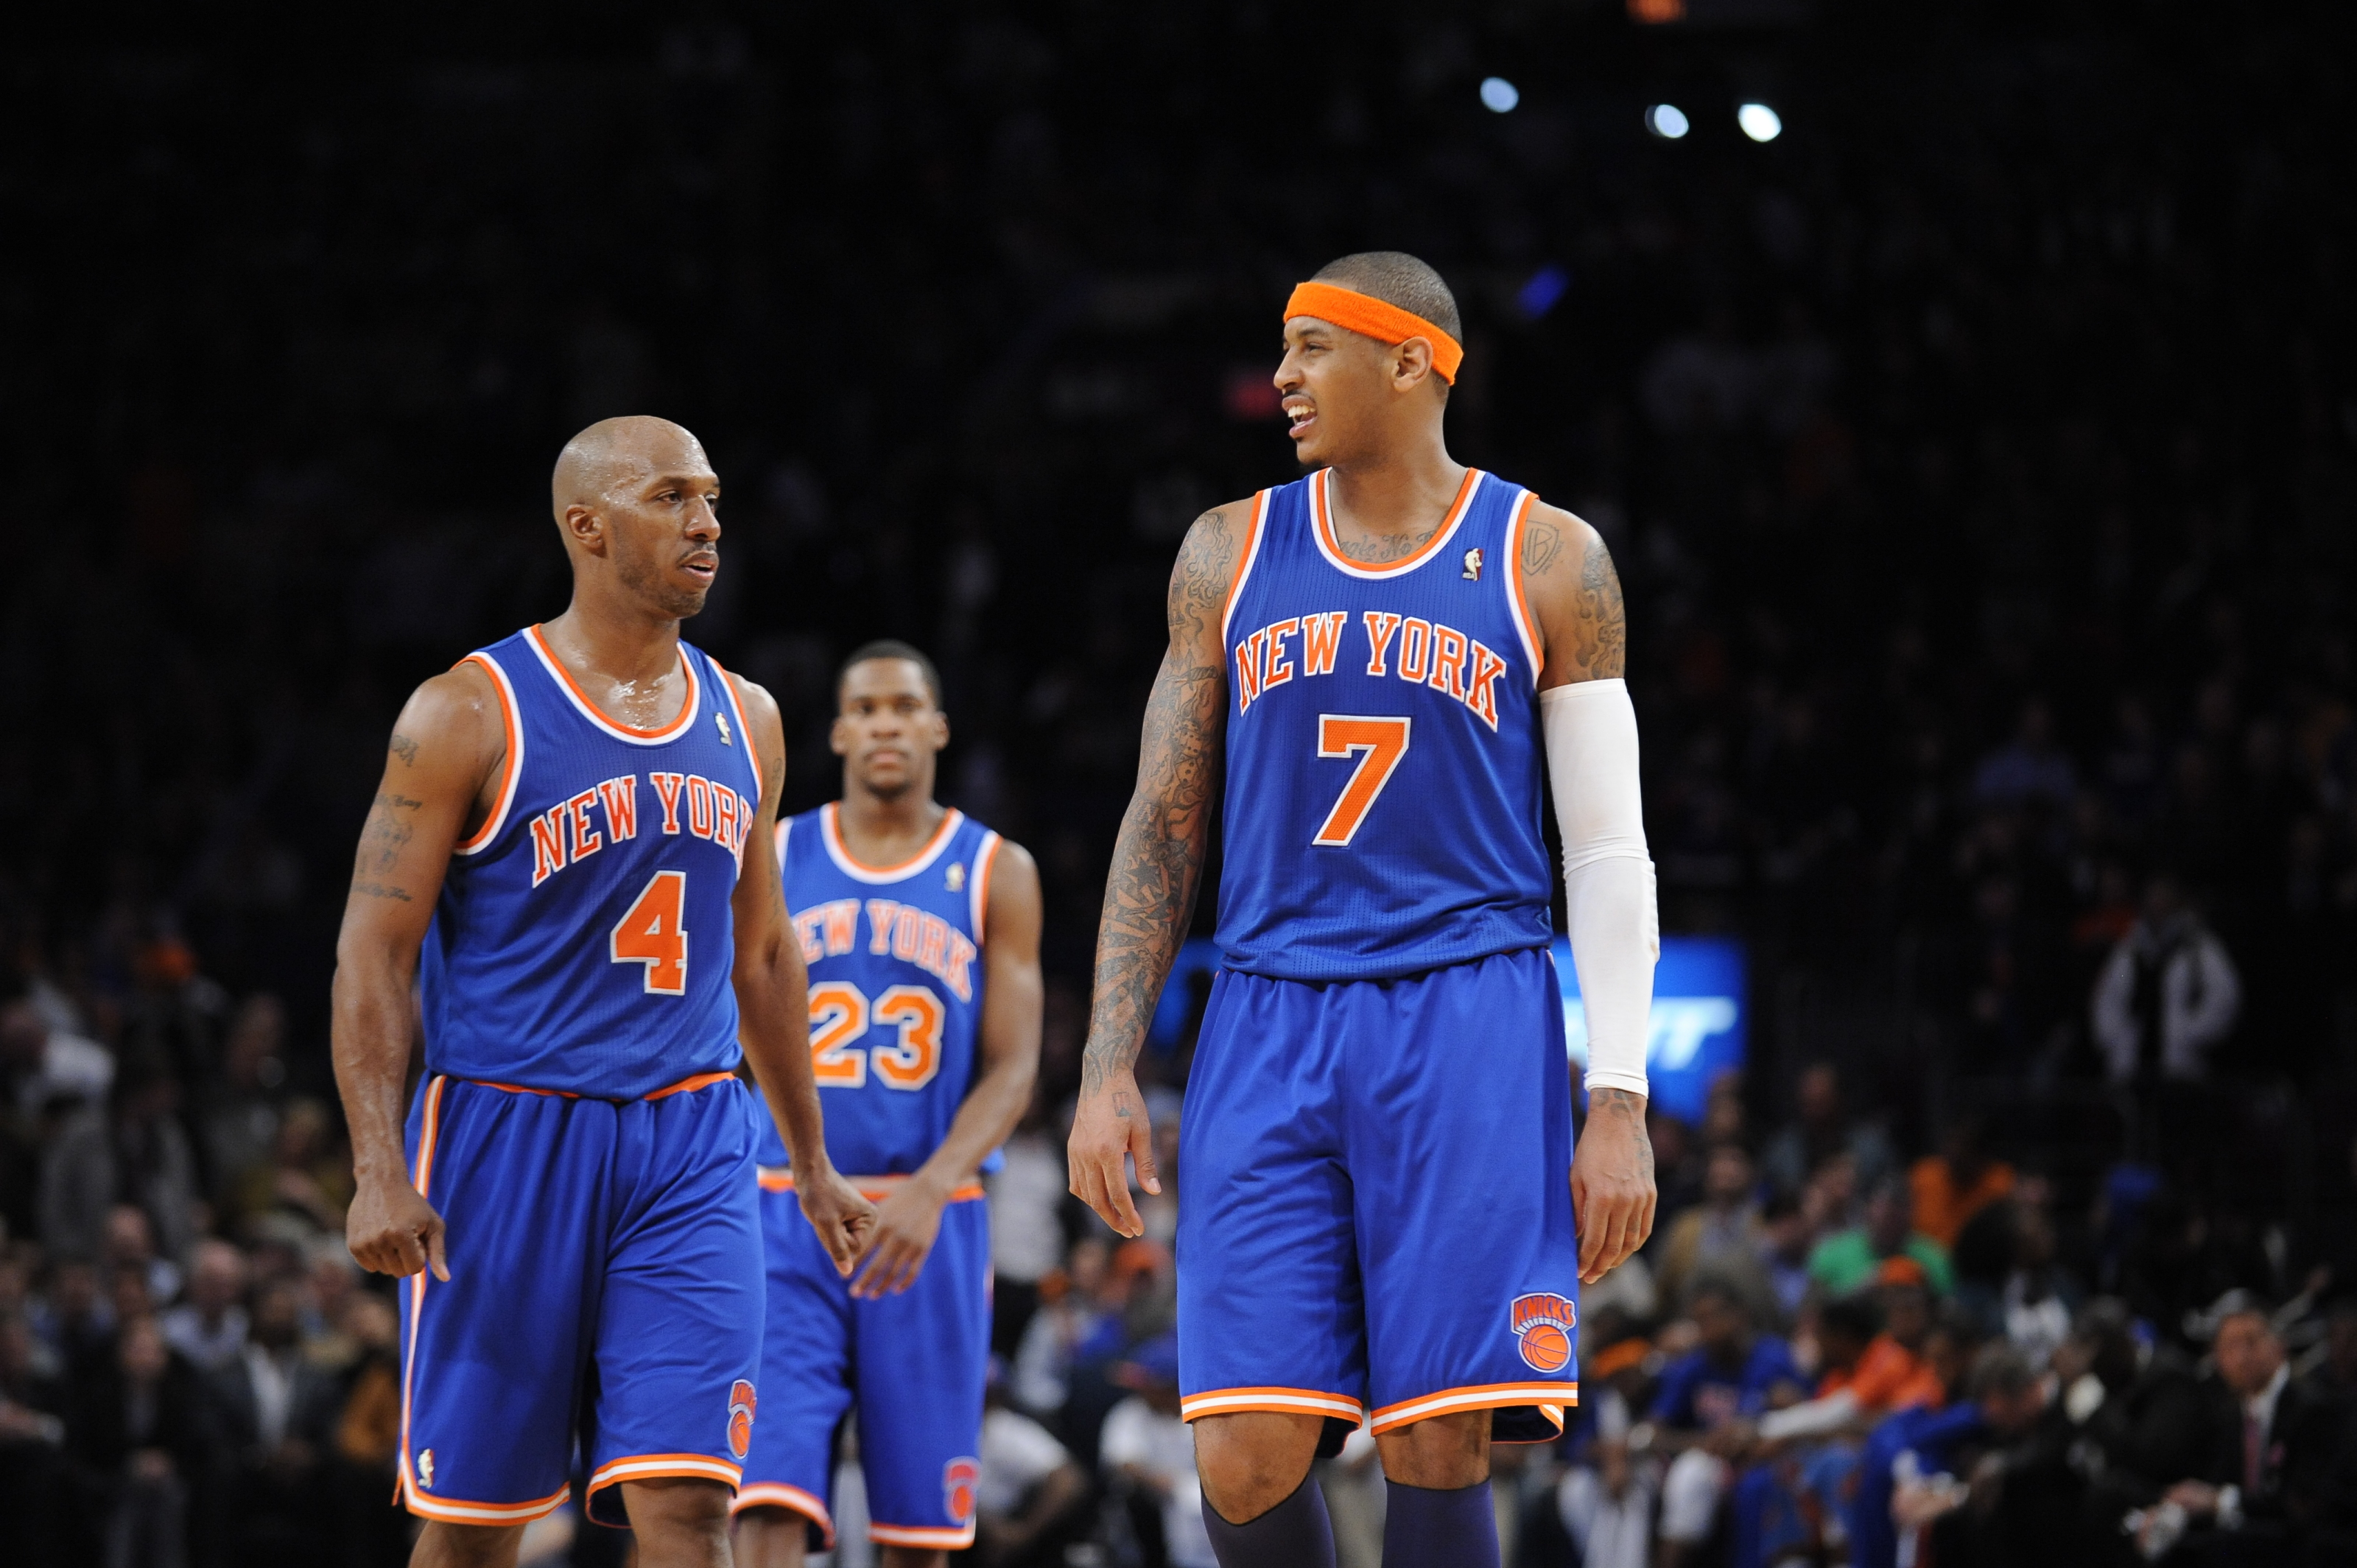 NBA New York Knicks Blue The Go To T-Shirt Carmelo Anthony #7